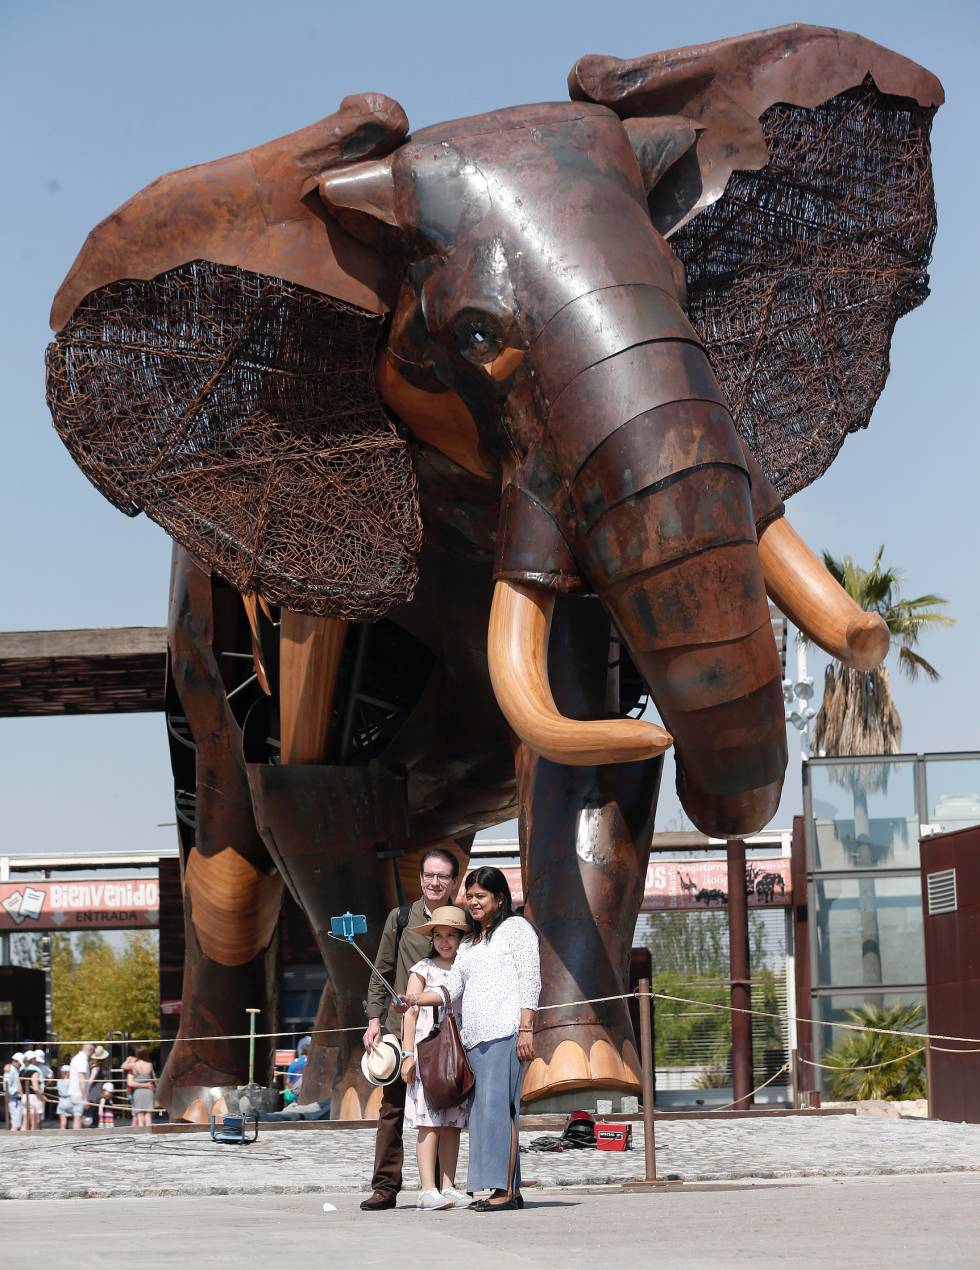 La Escultura De Un Elefante De 11 Metros De Altura Recibe A Los